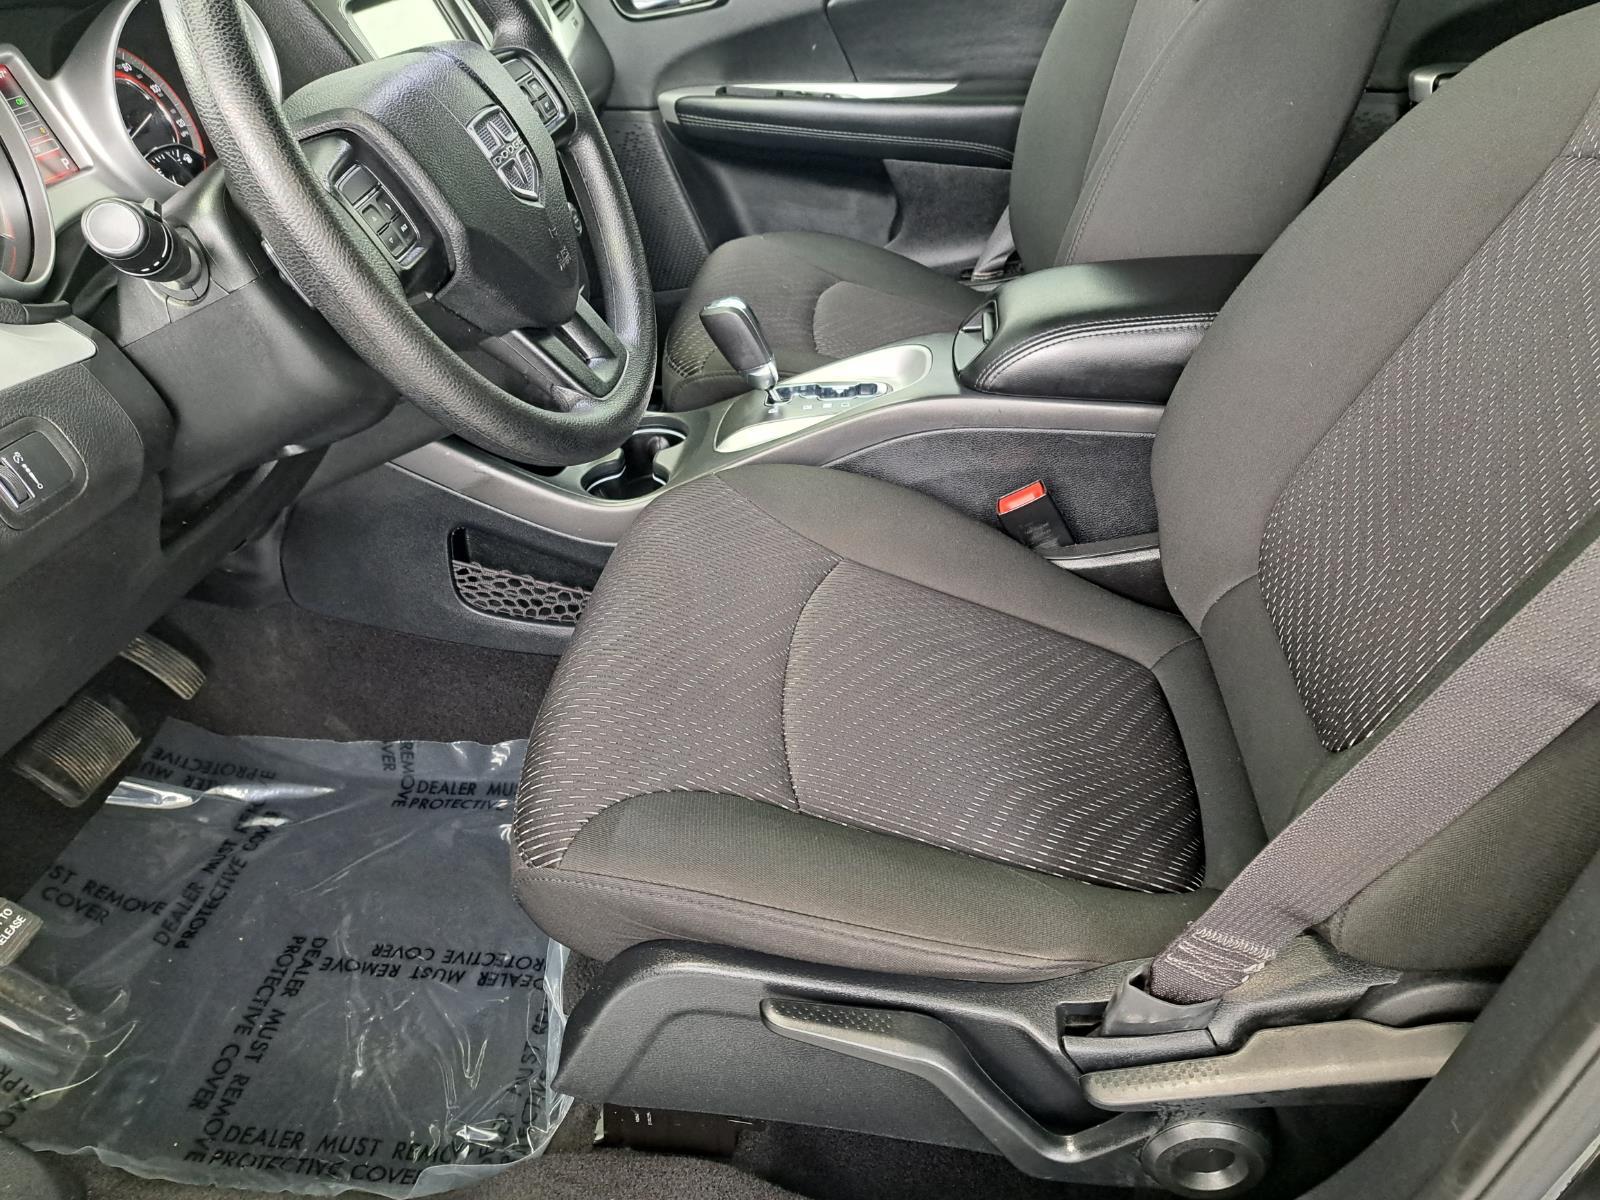 2019 Dodge Journey SE SUV Front Wheel Drive 21